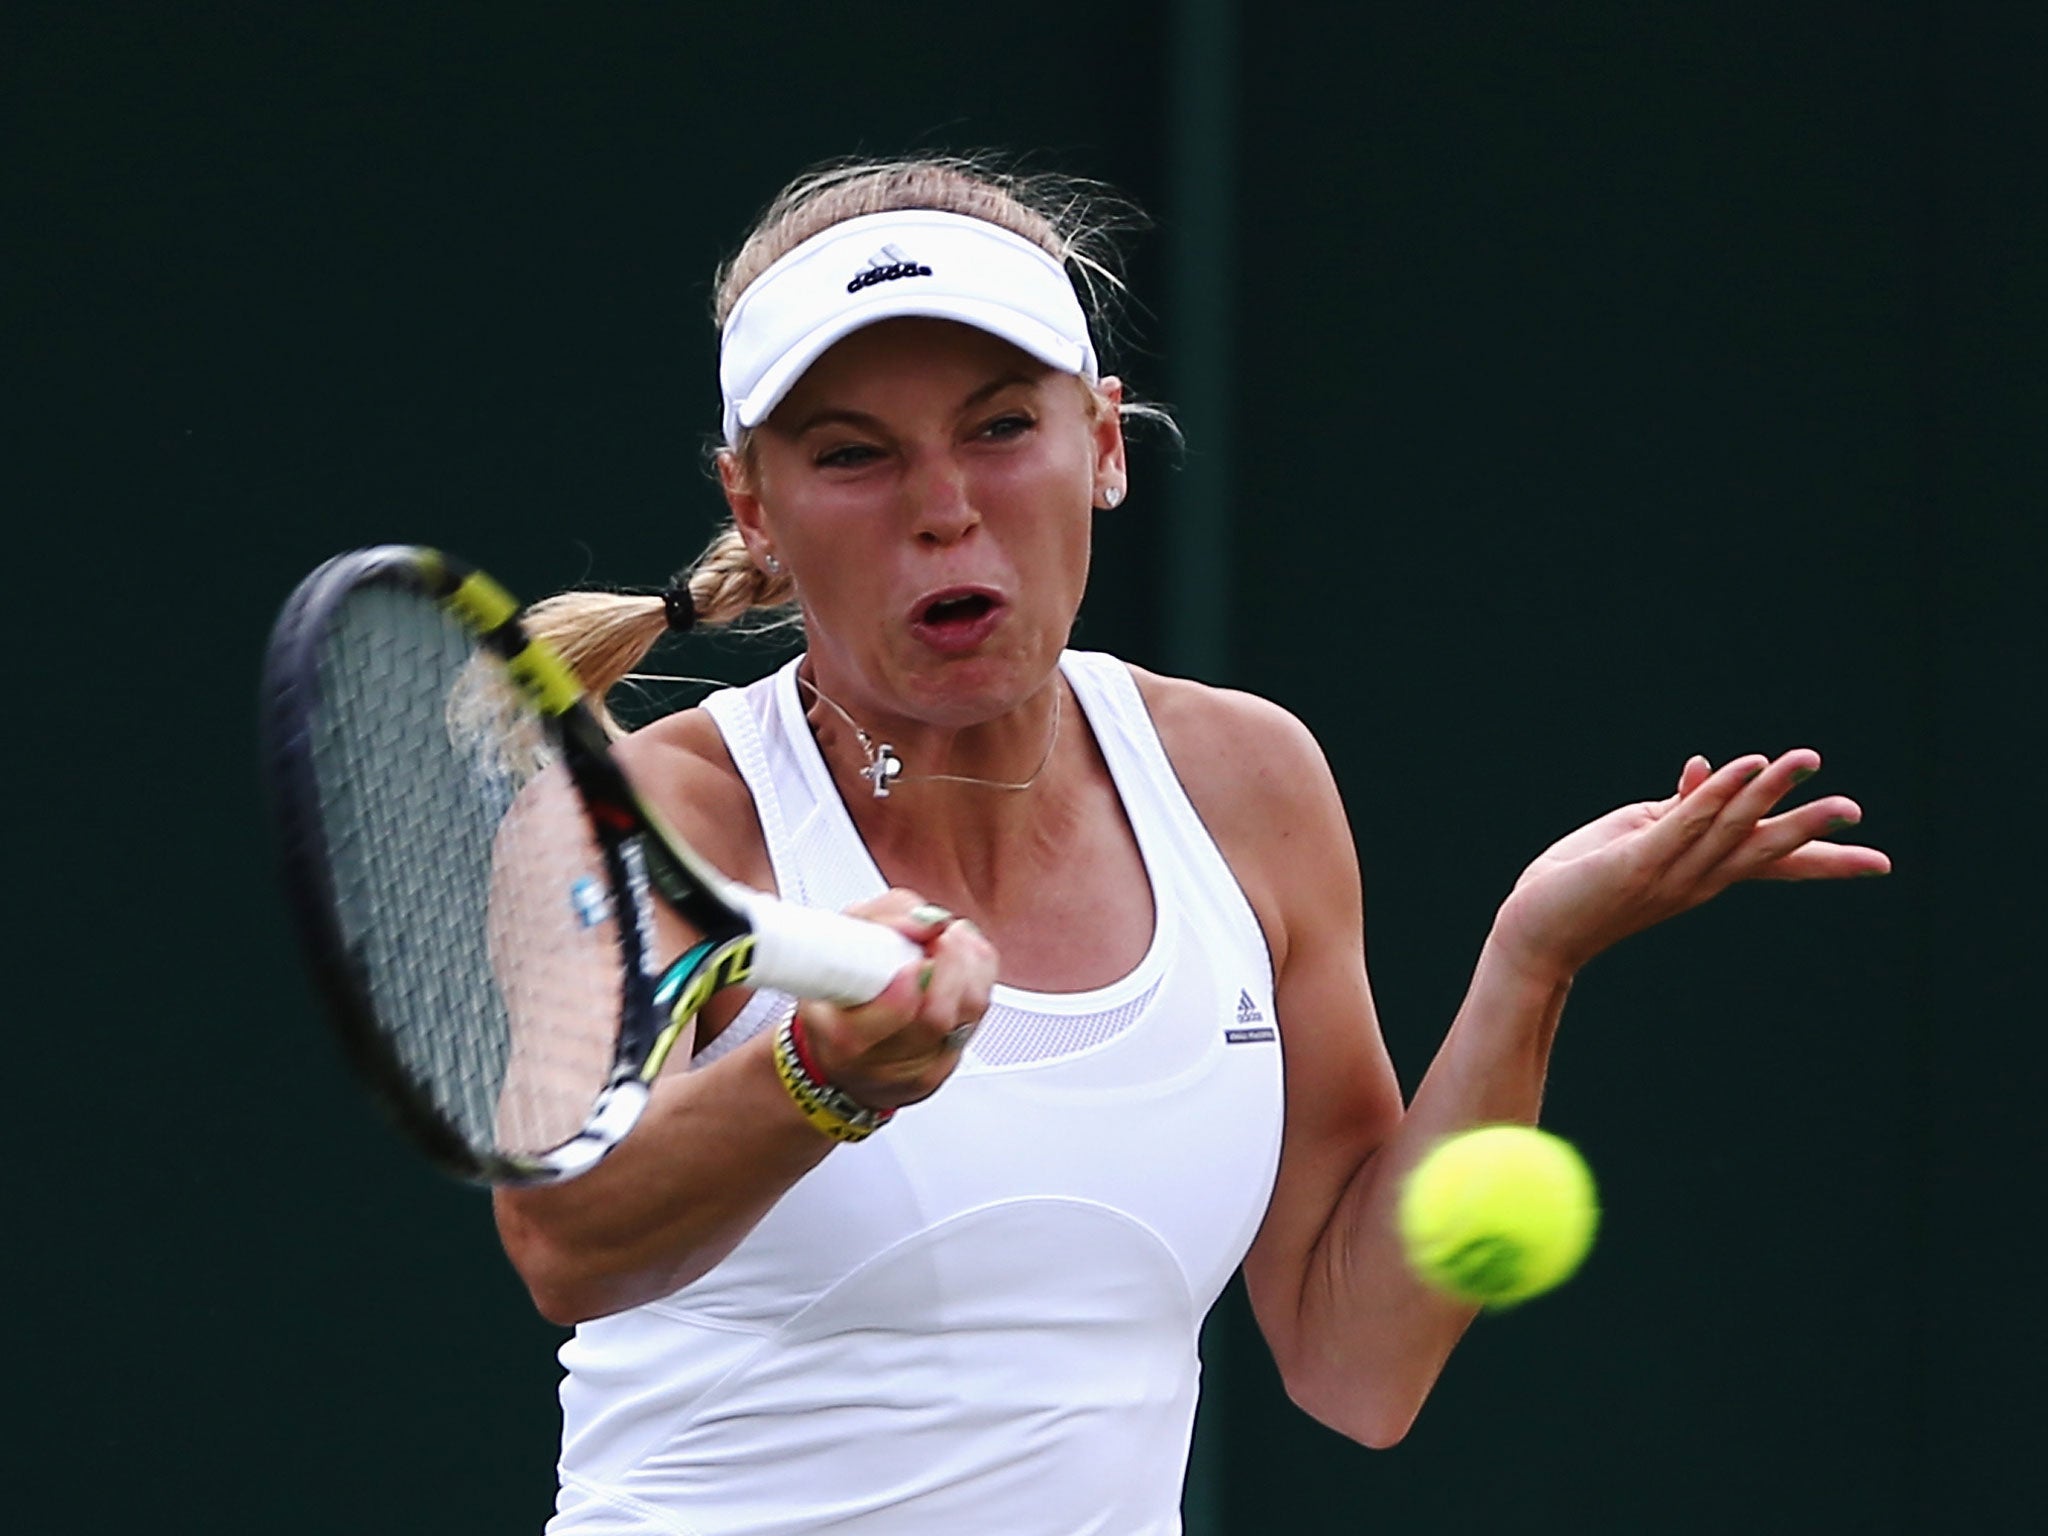 Caroline Wozniacki plays a return during her defeat by Barbora Zahlavova Strycova